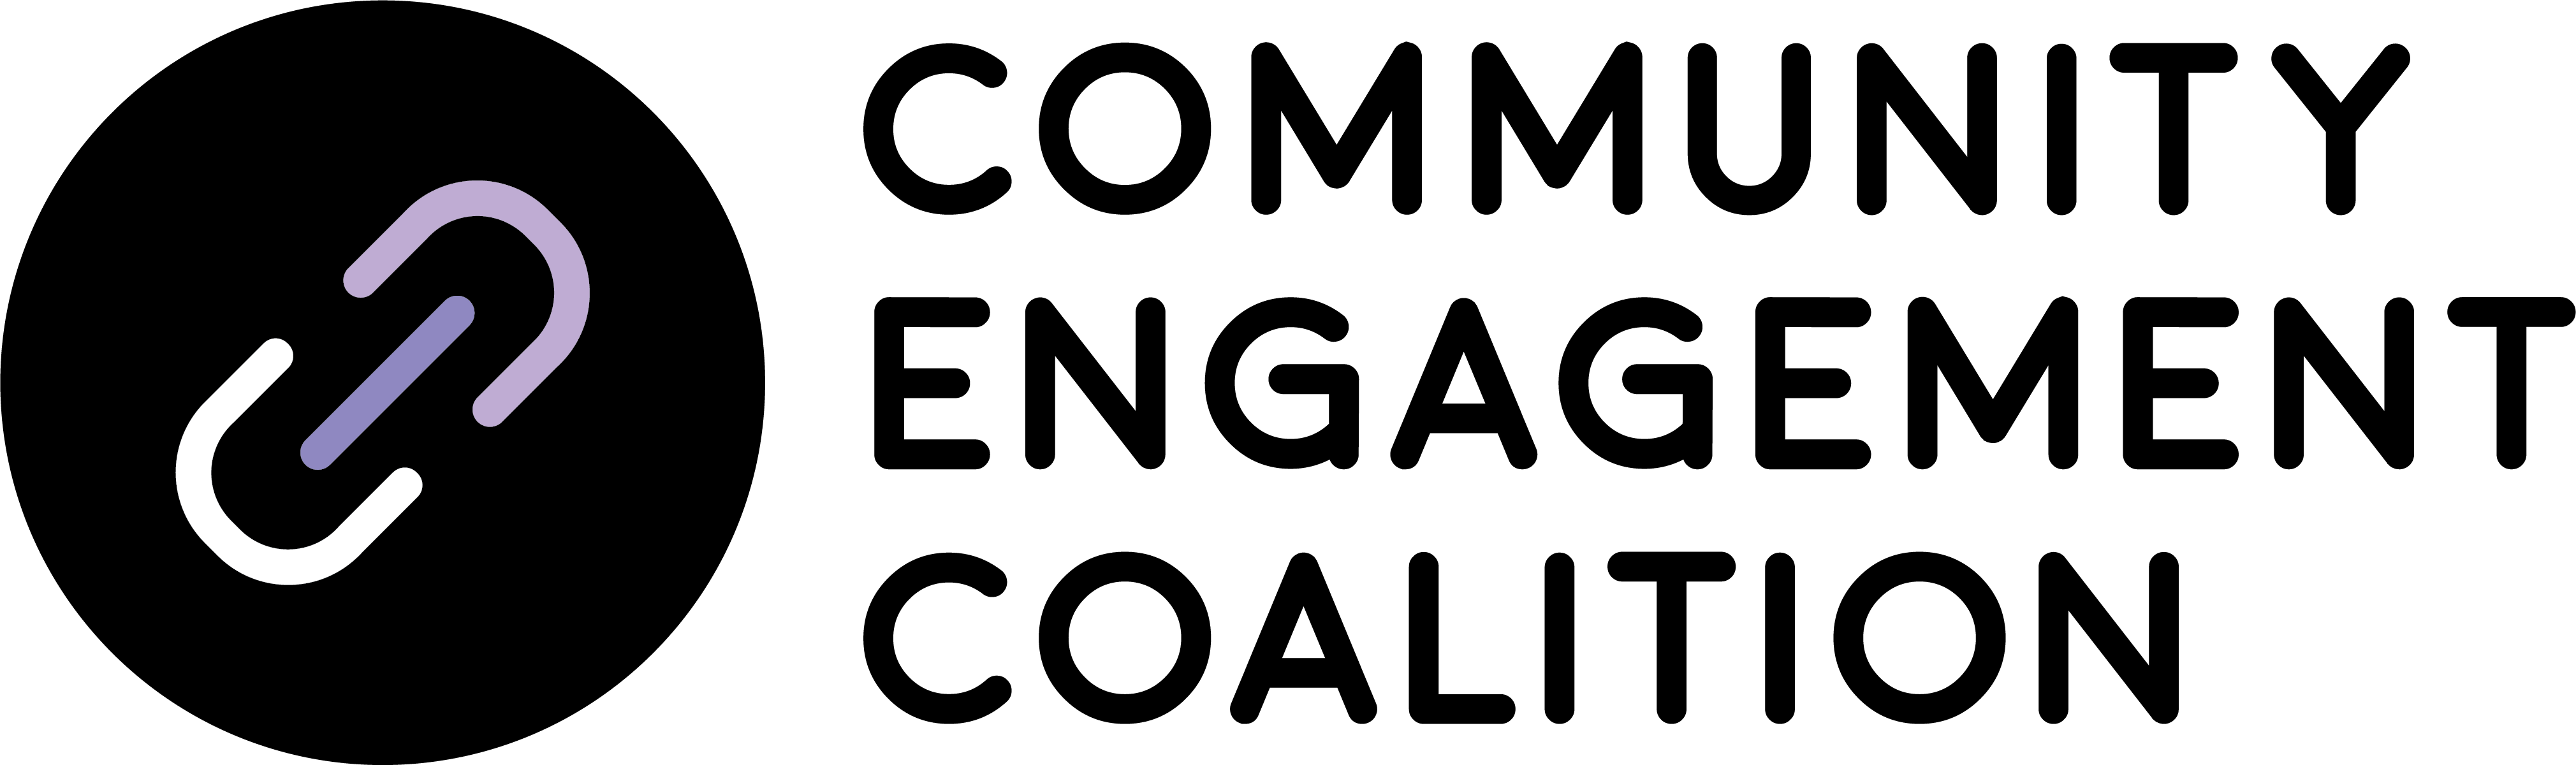 ce-coalition-logo.png